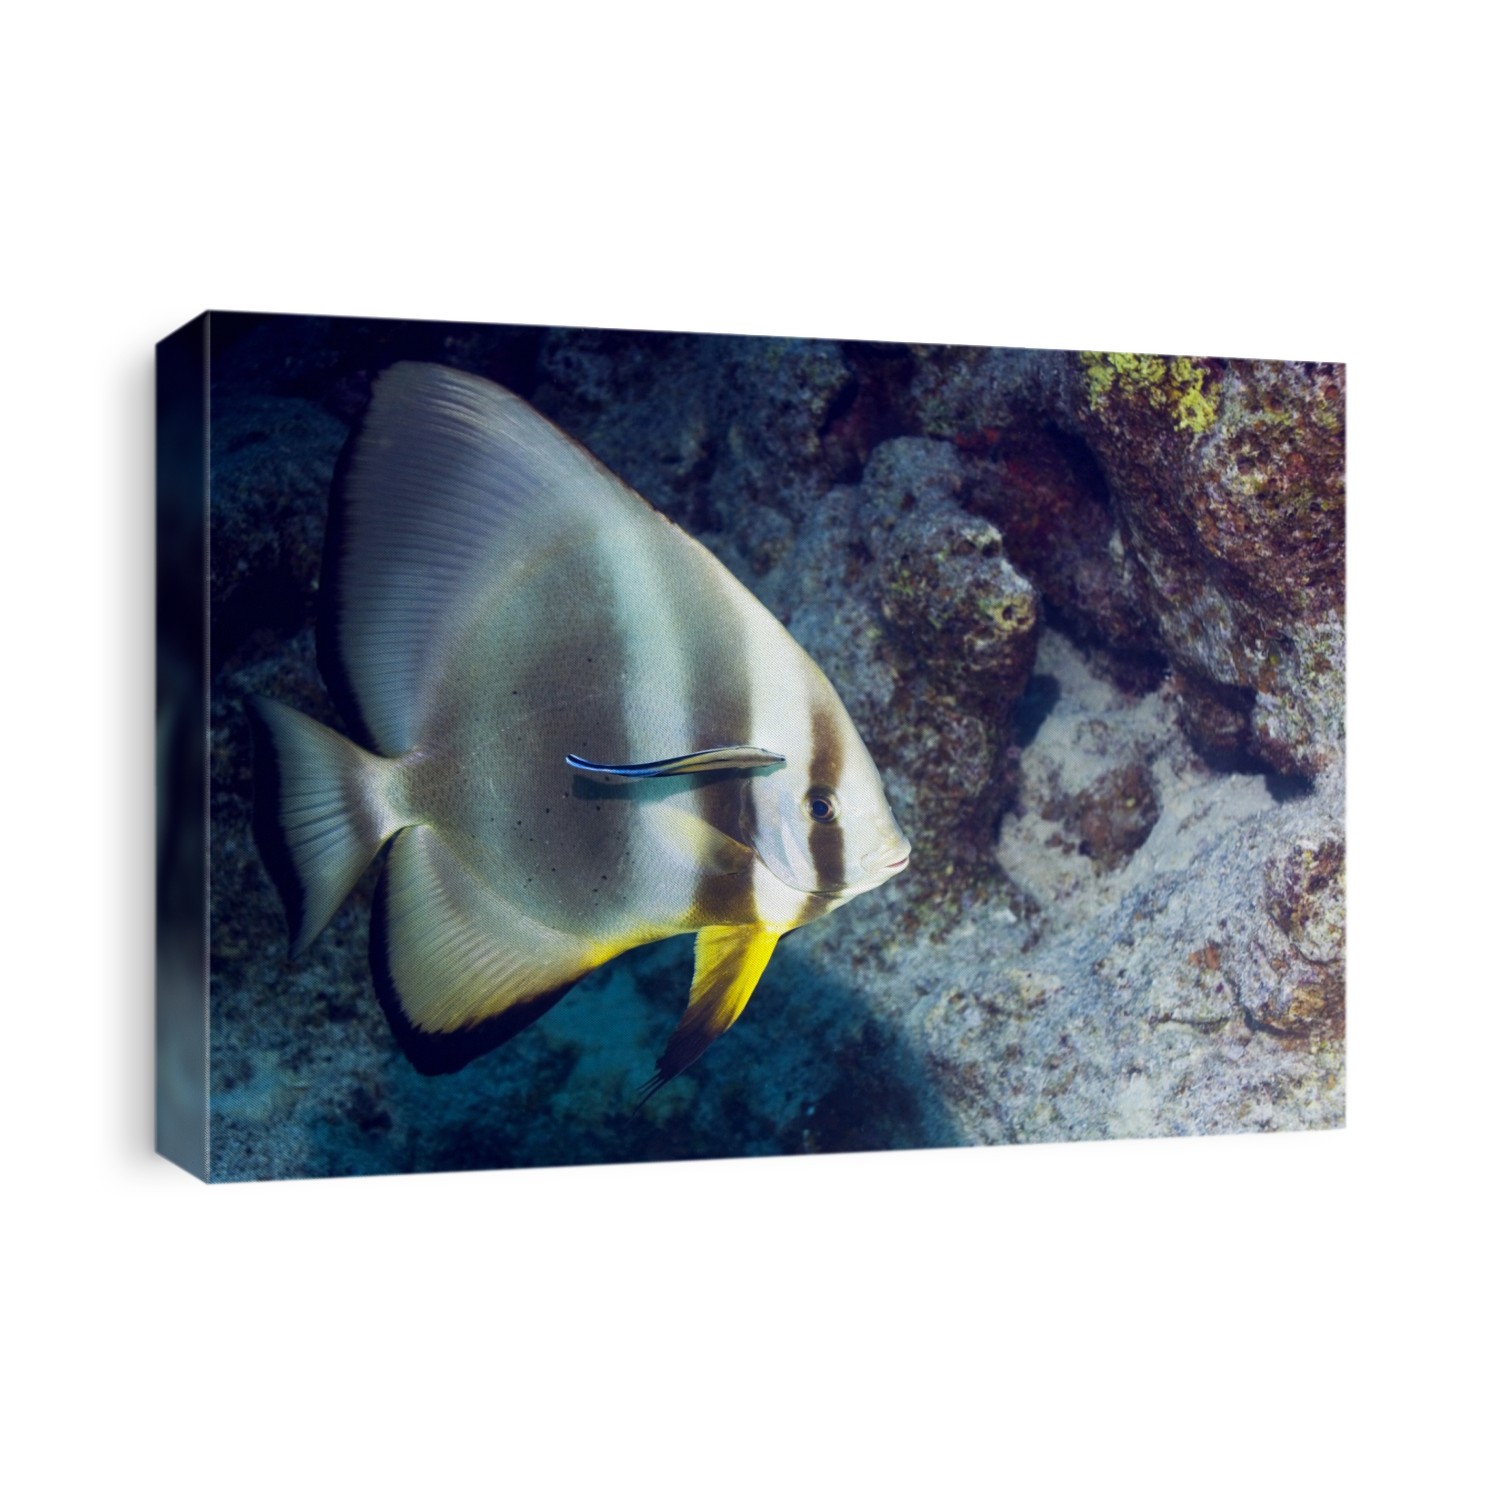 Circular batfish (Platax orbicularis). Photographed in the Red Sea, Egypt.